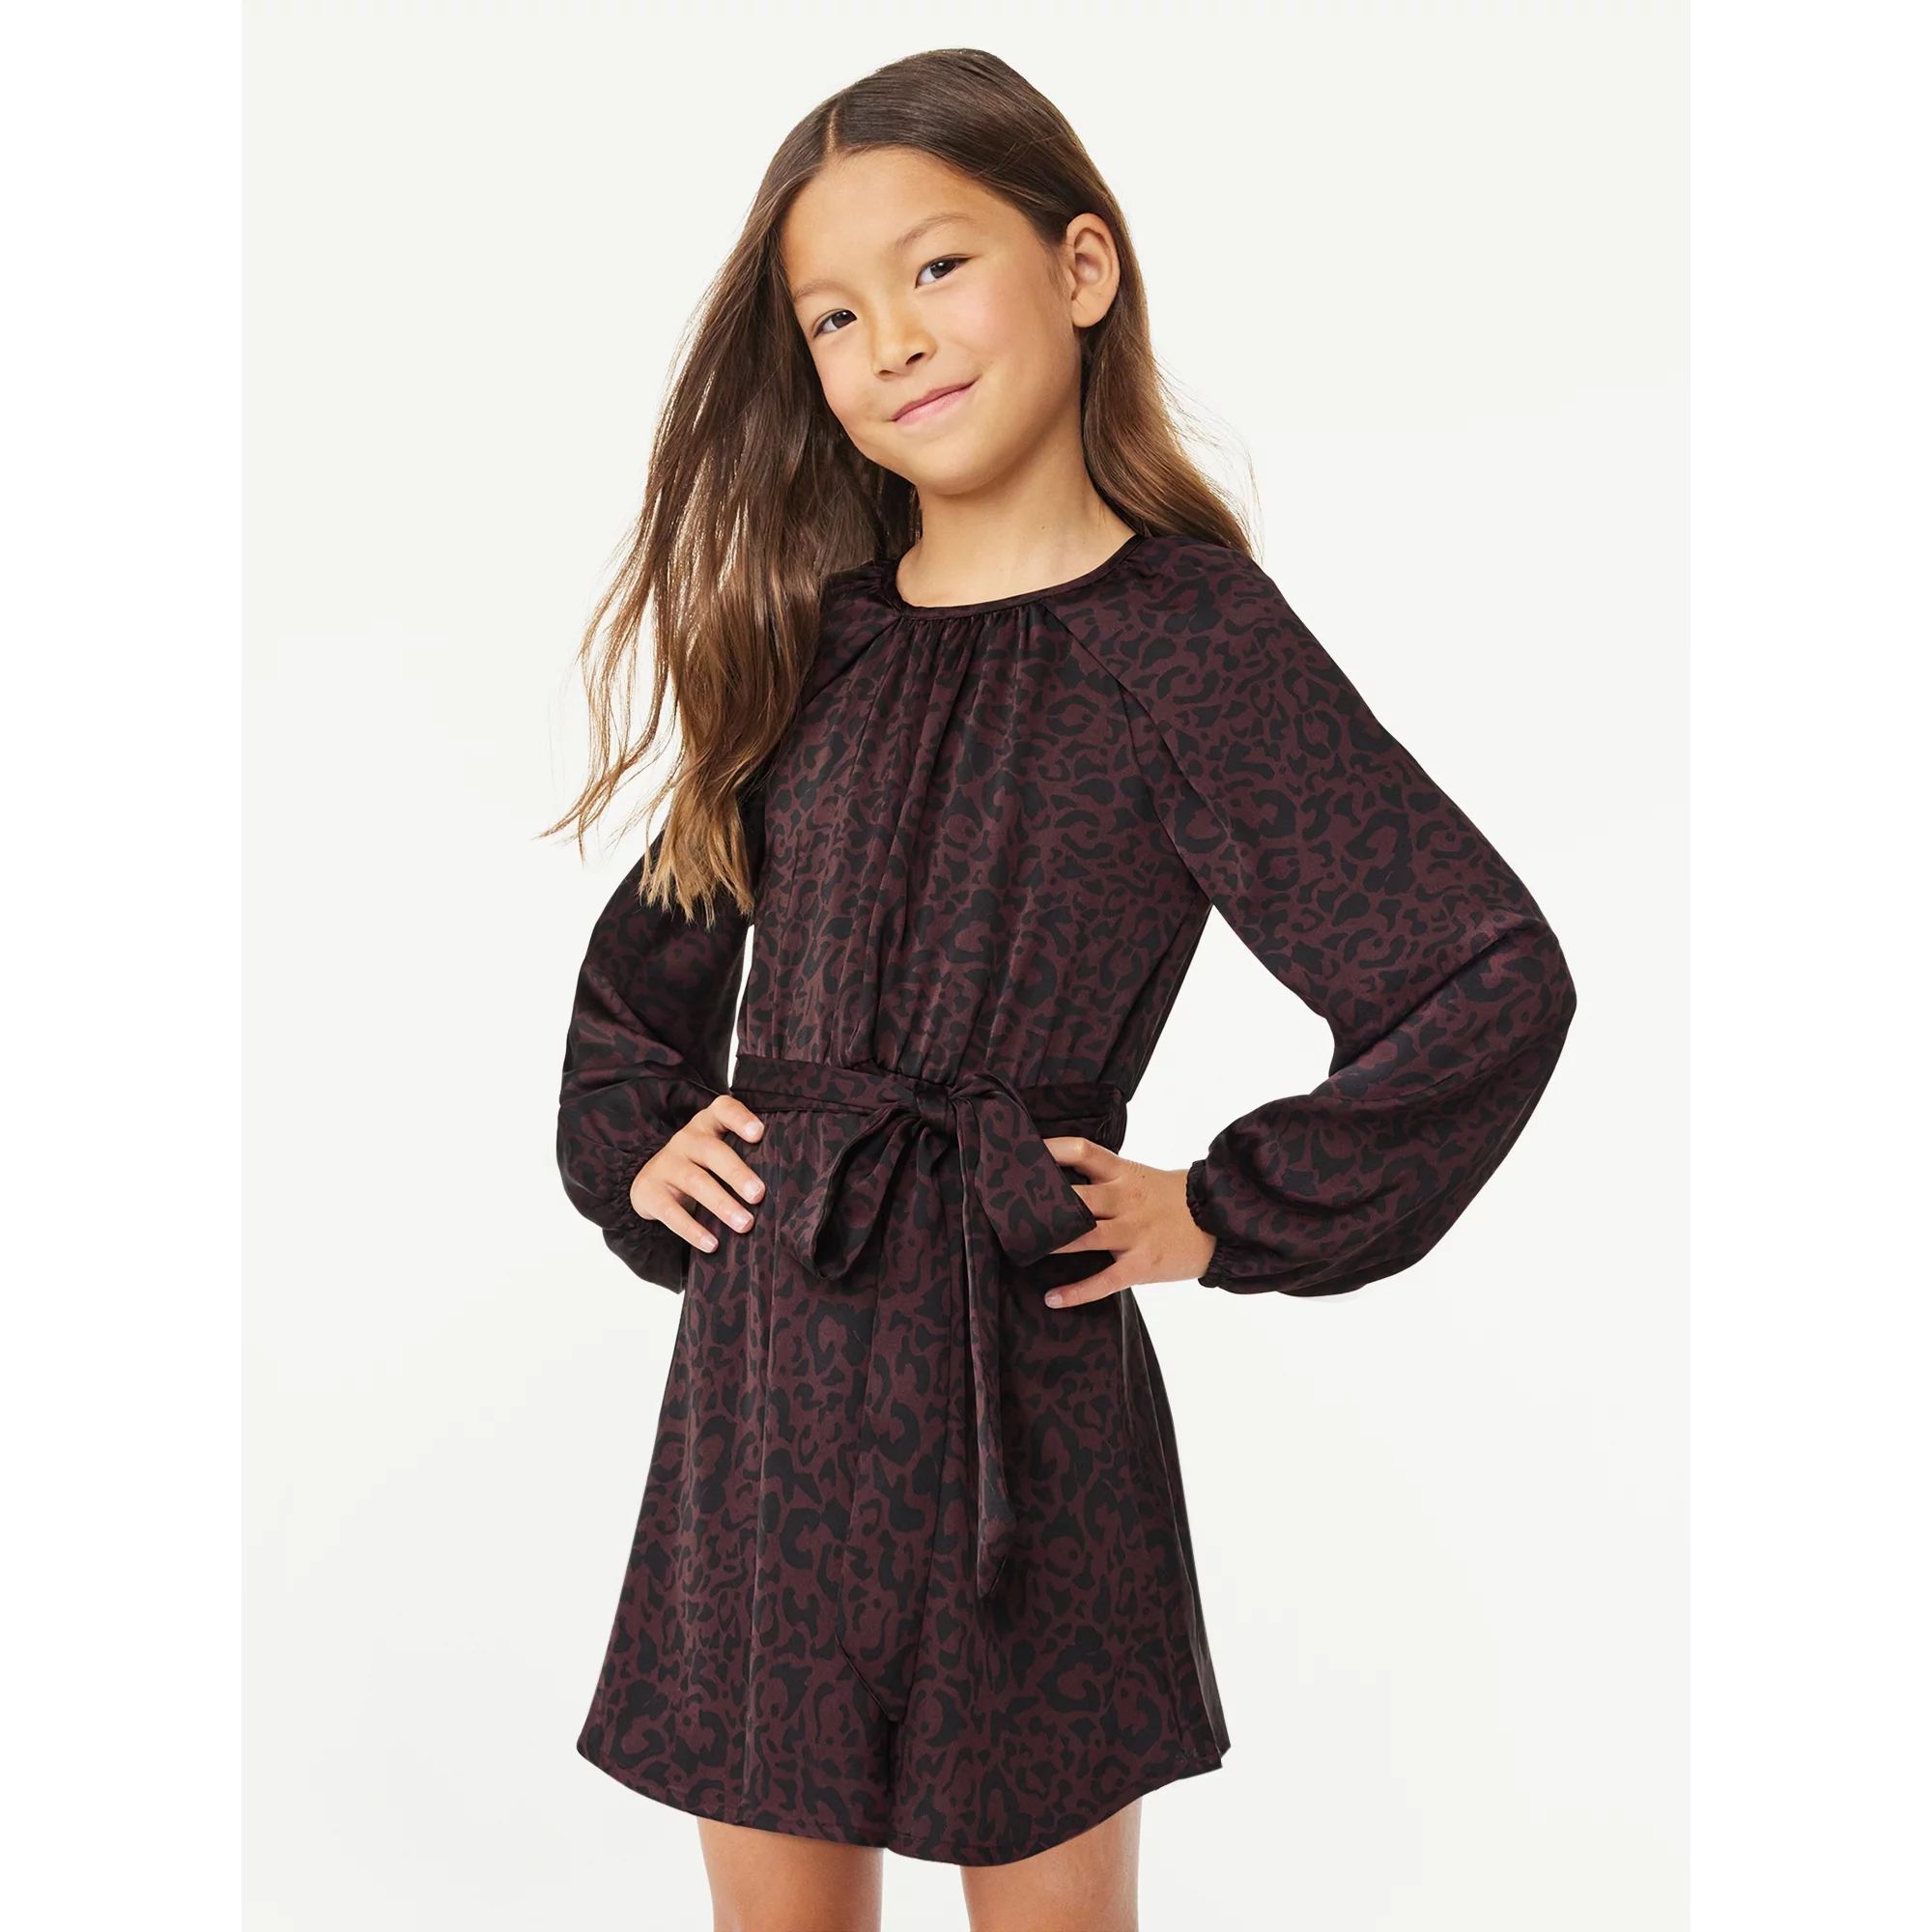 Scoop Girls Raglan Sleeve Mini Dress with Tie Belt, Sizes 4-18 | Walmart (US)